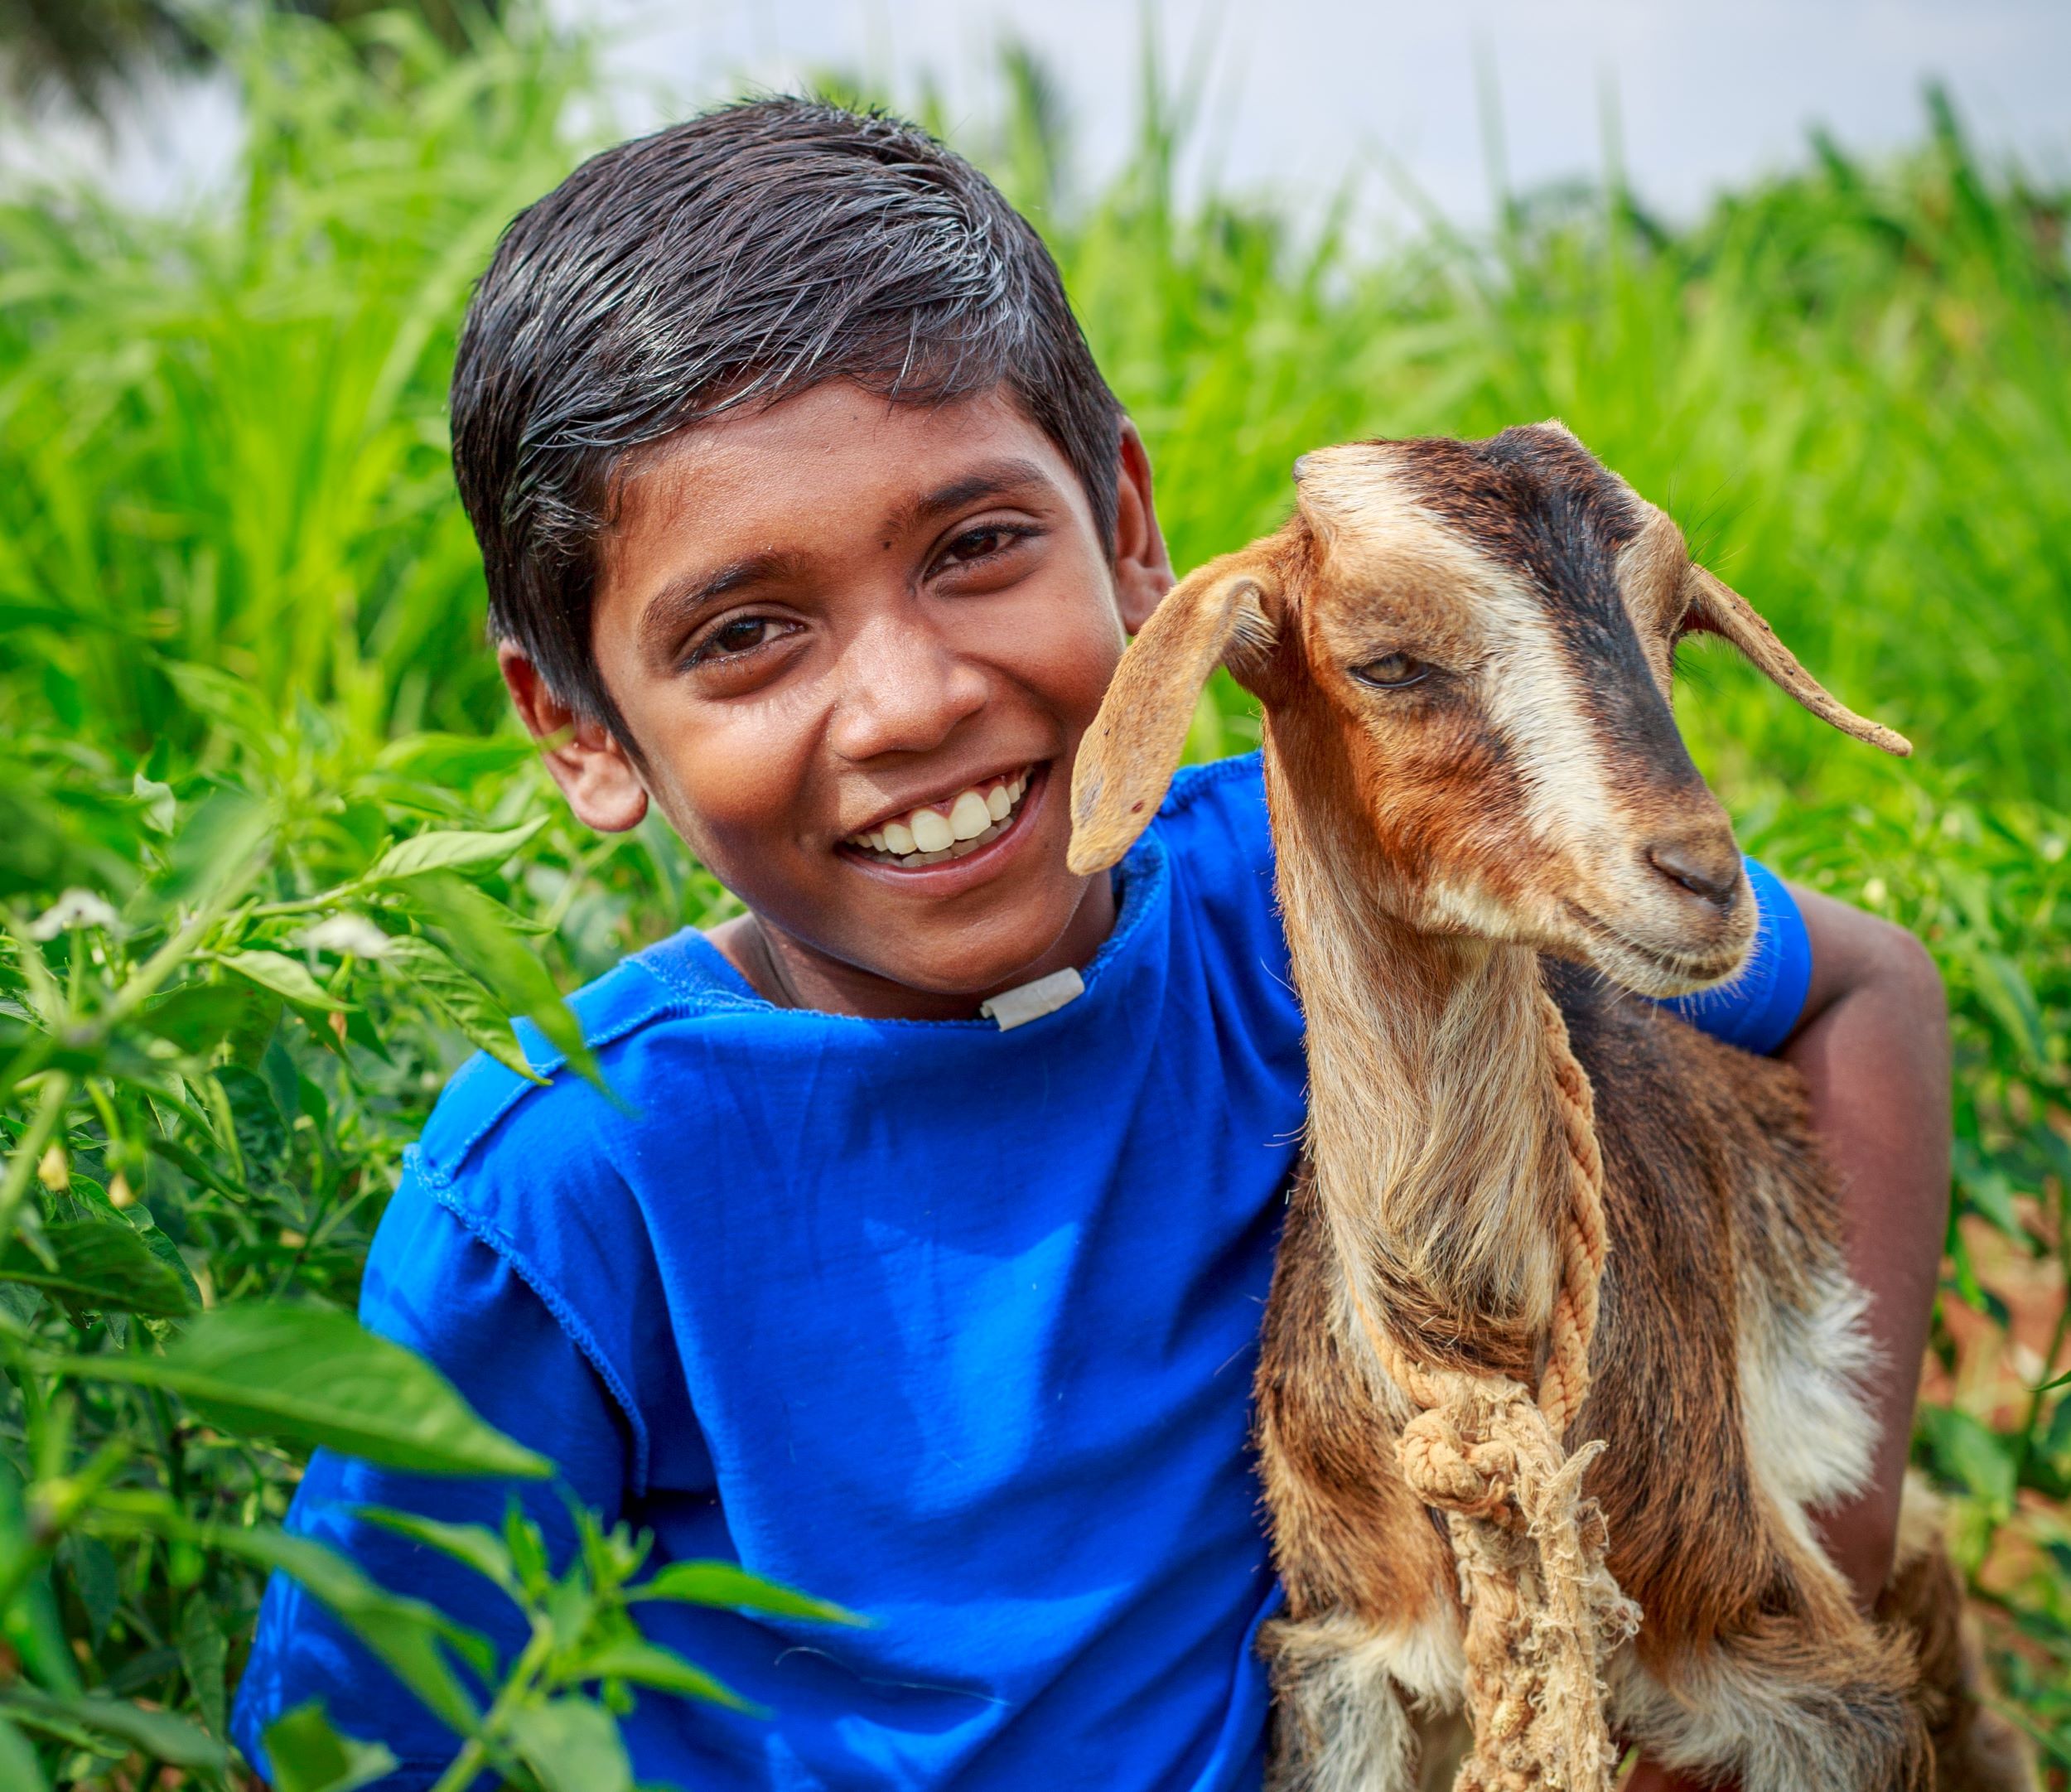 Balachandran's goat is his best friend